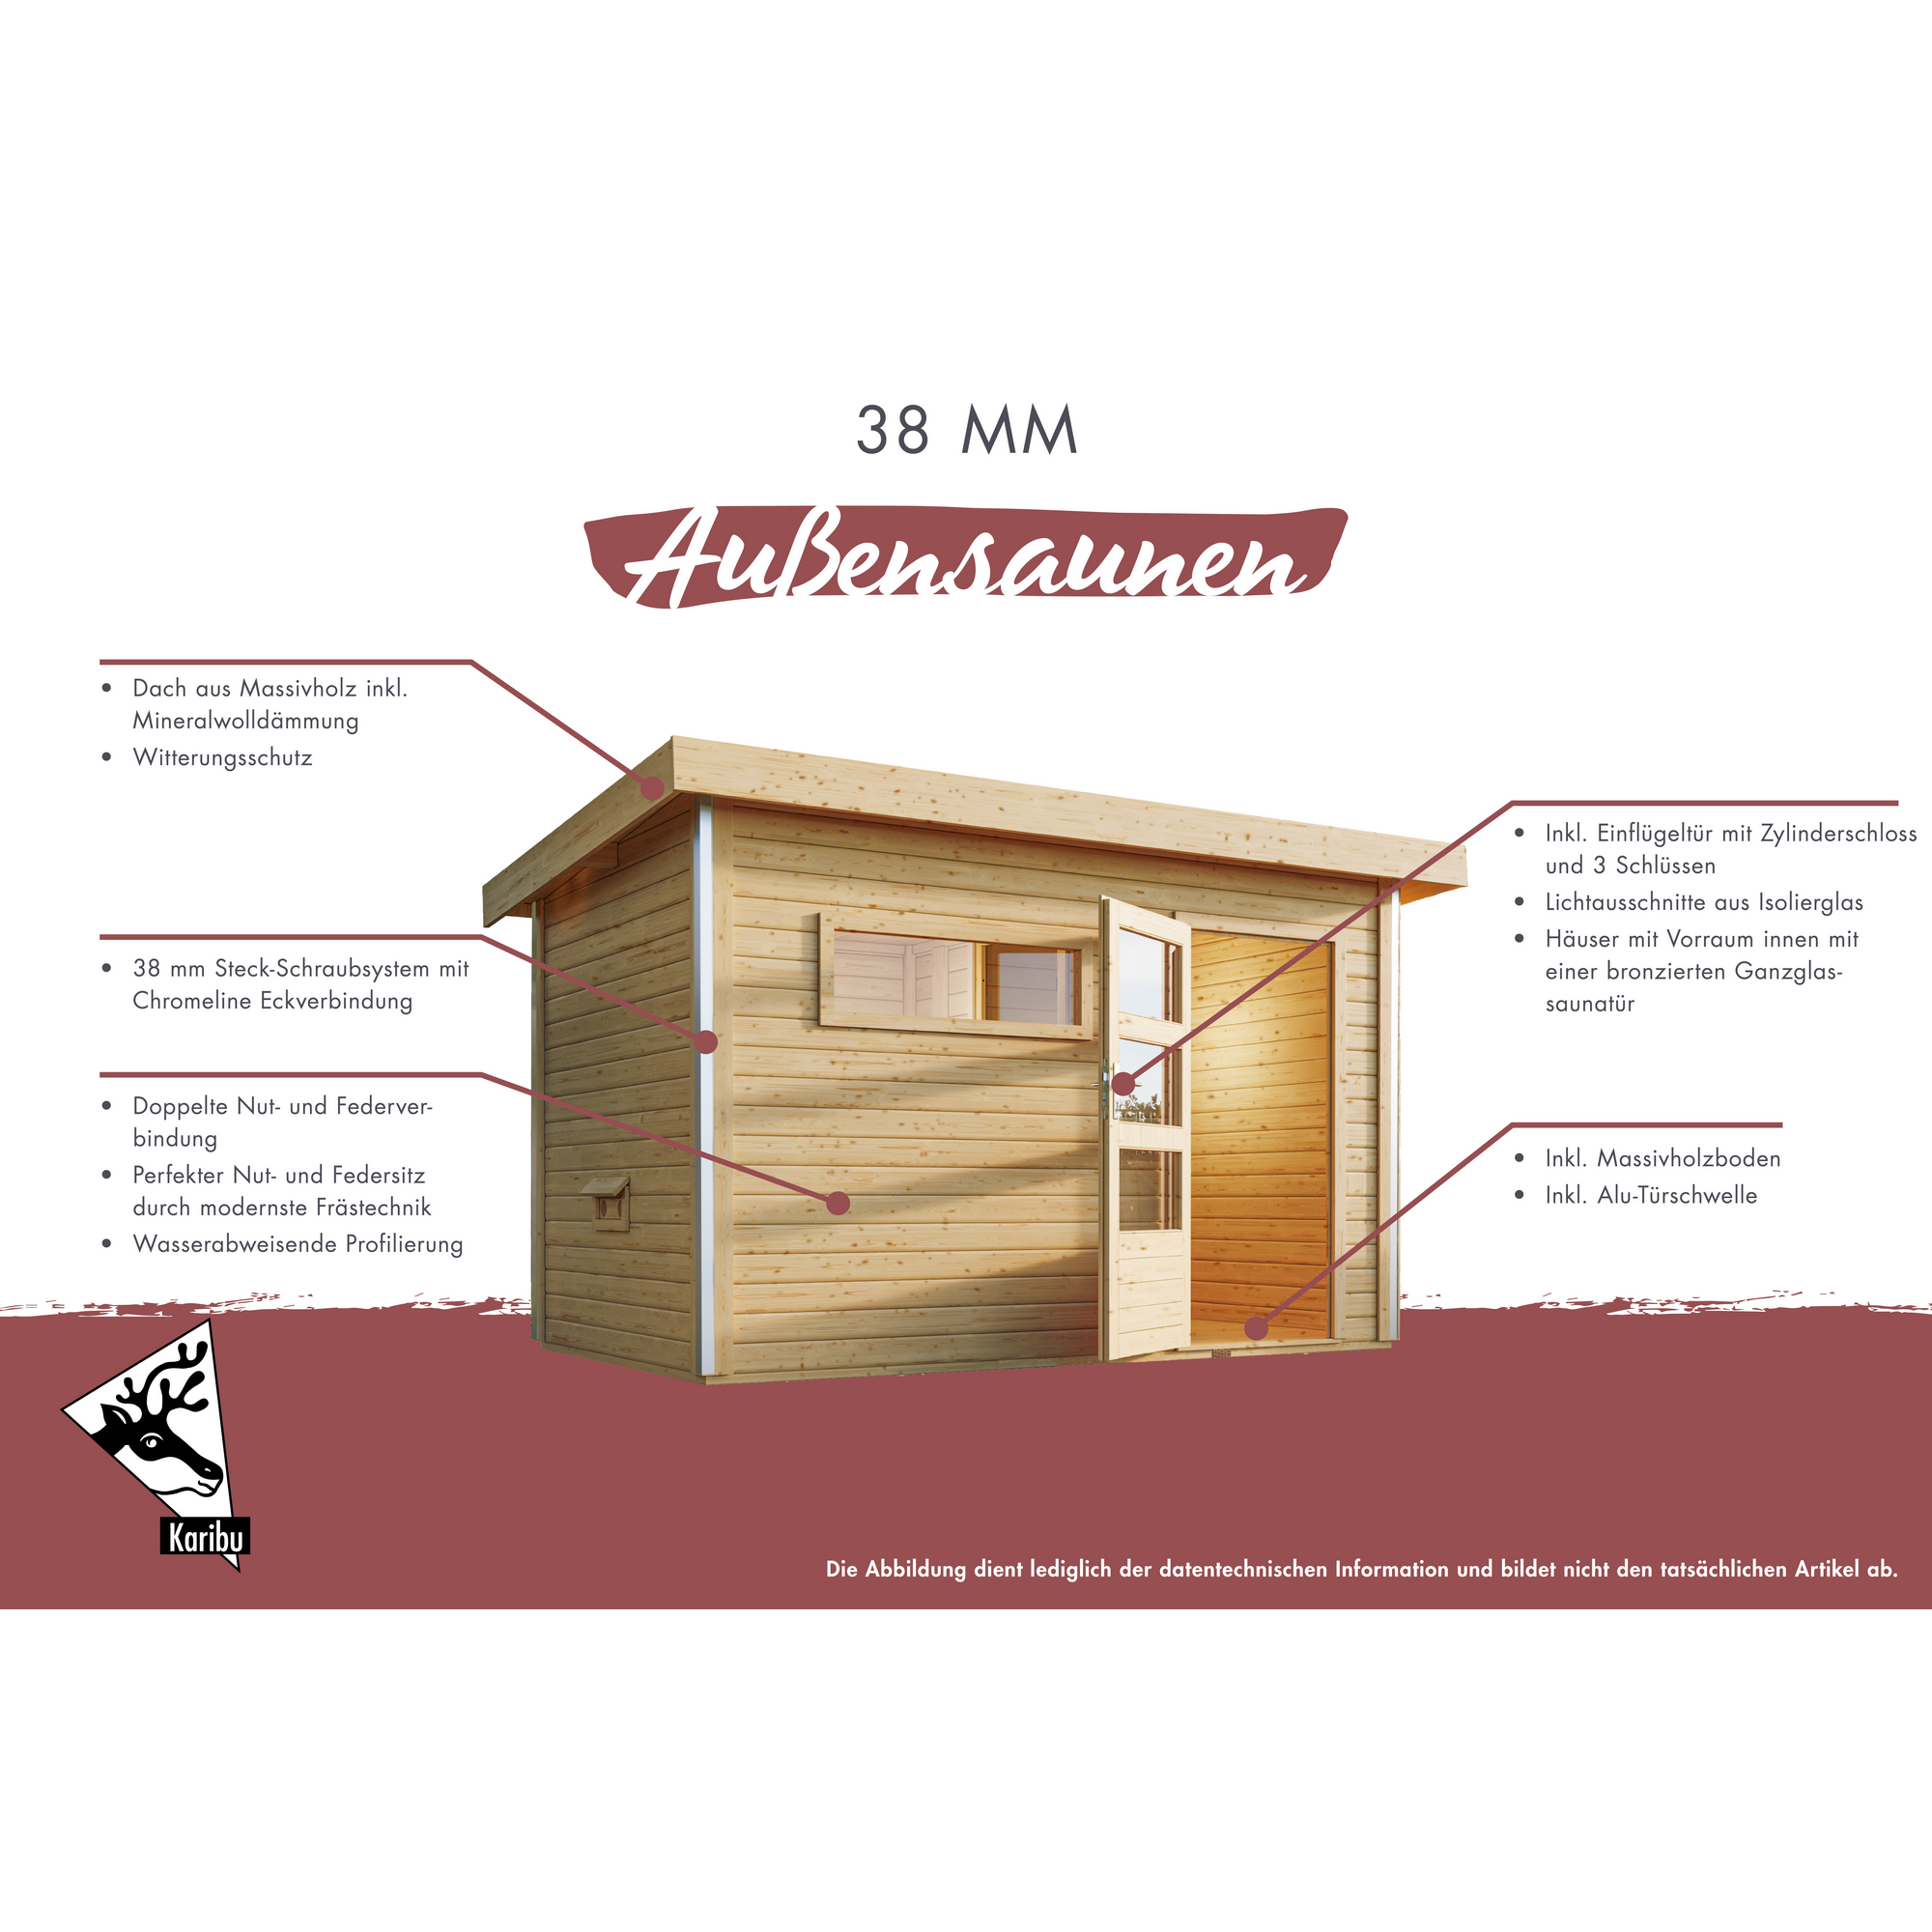 Gartenhaus mit Sauna 'Enrique 1 Variante A' naturbelassen 9 kW Ofen externe Steuerung 308 x 308 x 242 cm + product picture